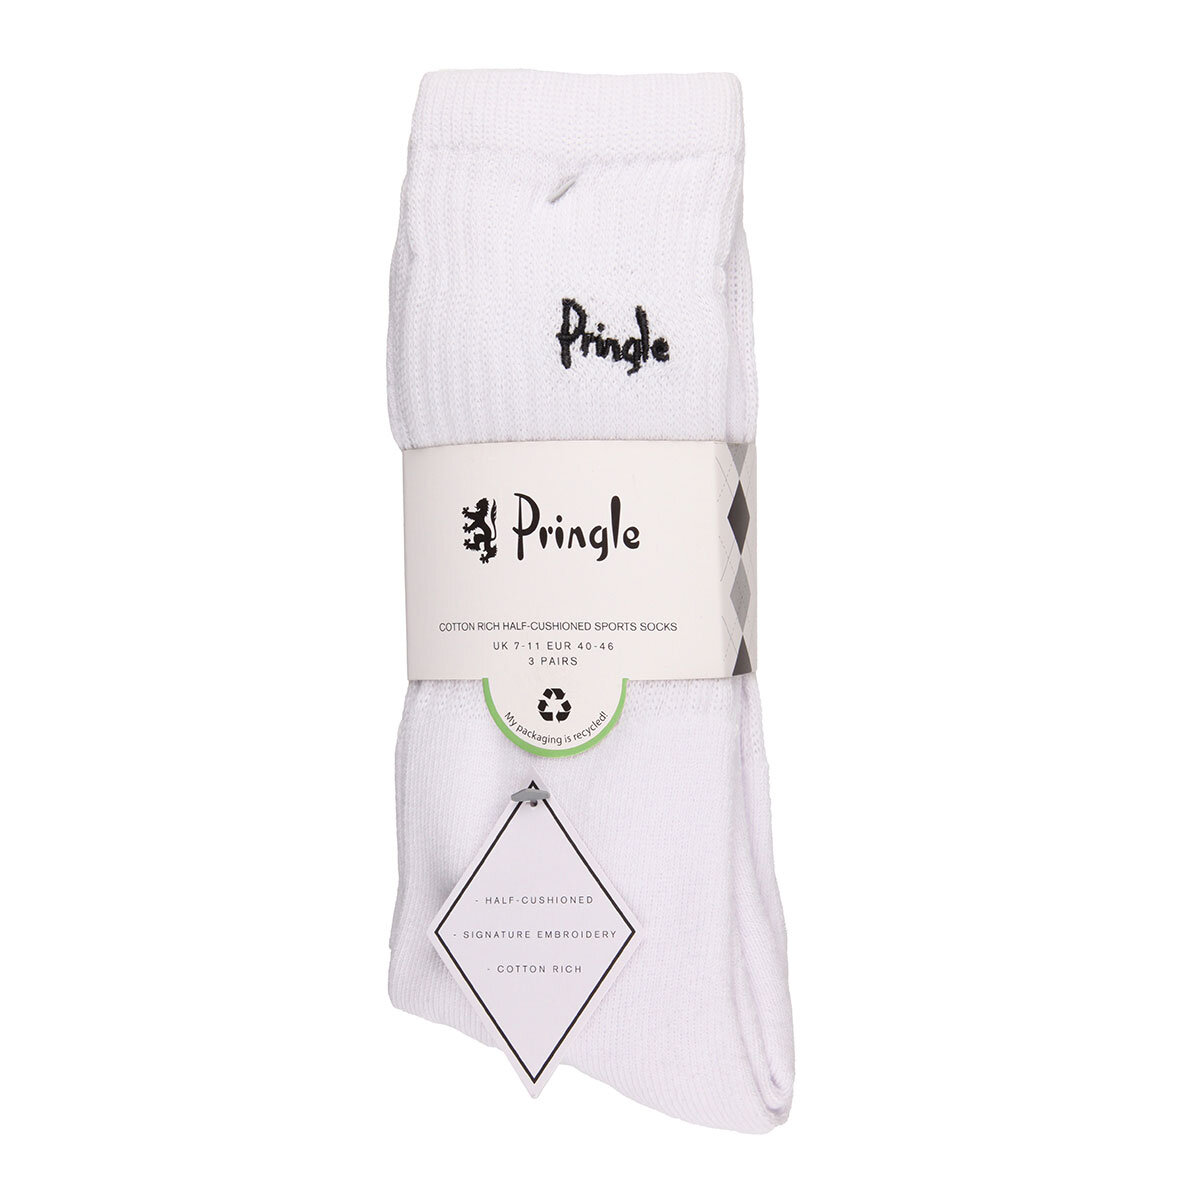 Pringle Men's 2 x 3 Pack Cushioned Sports Socks in White, Size 7-11